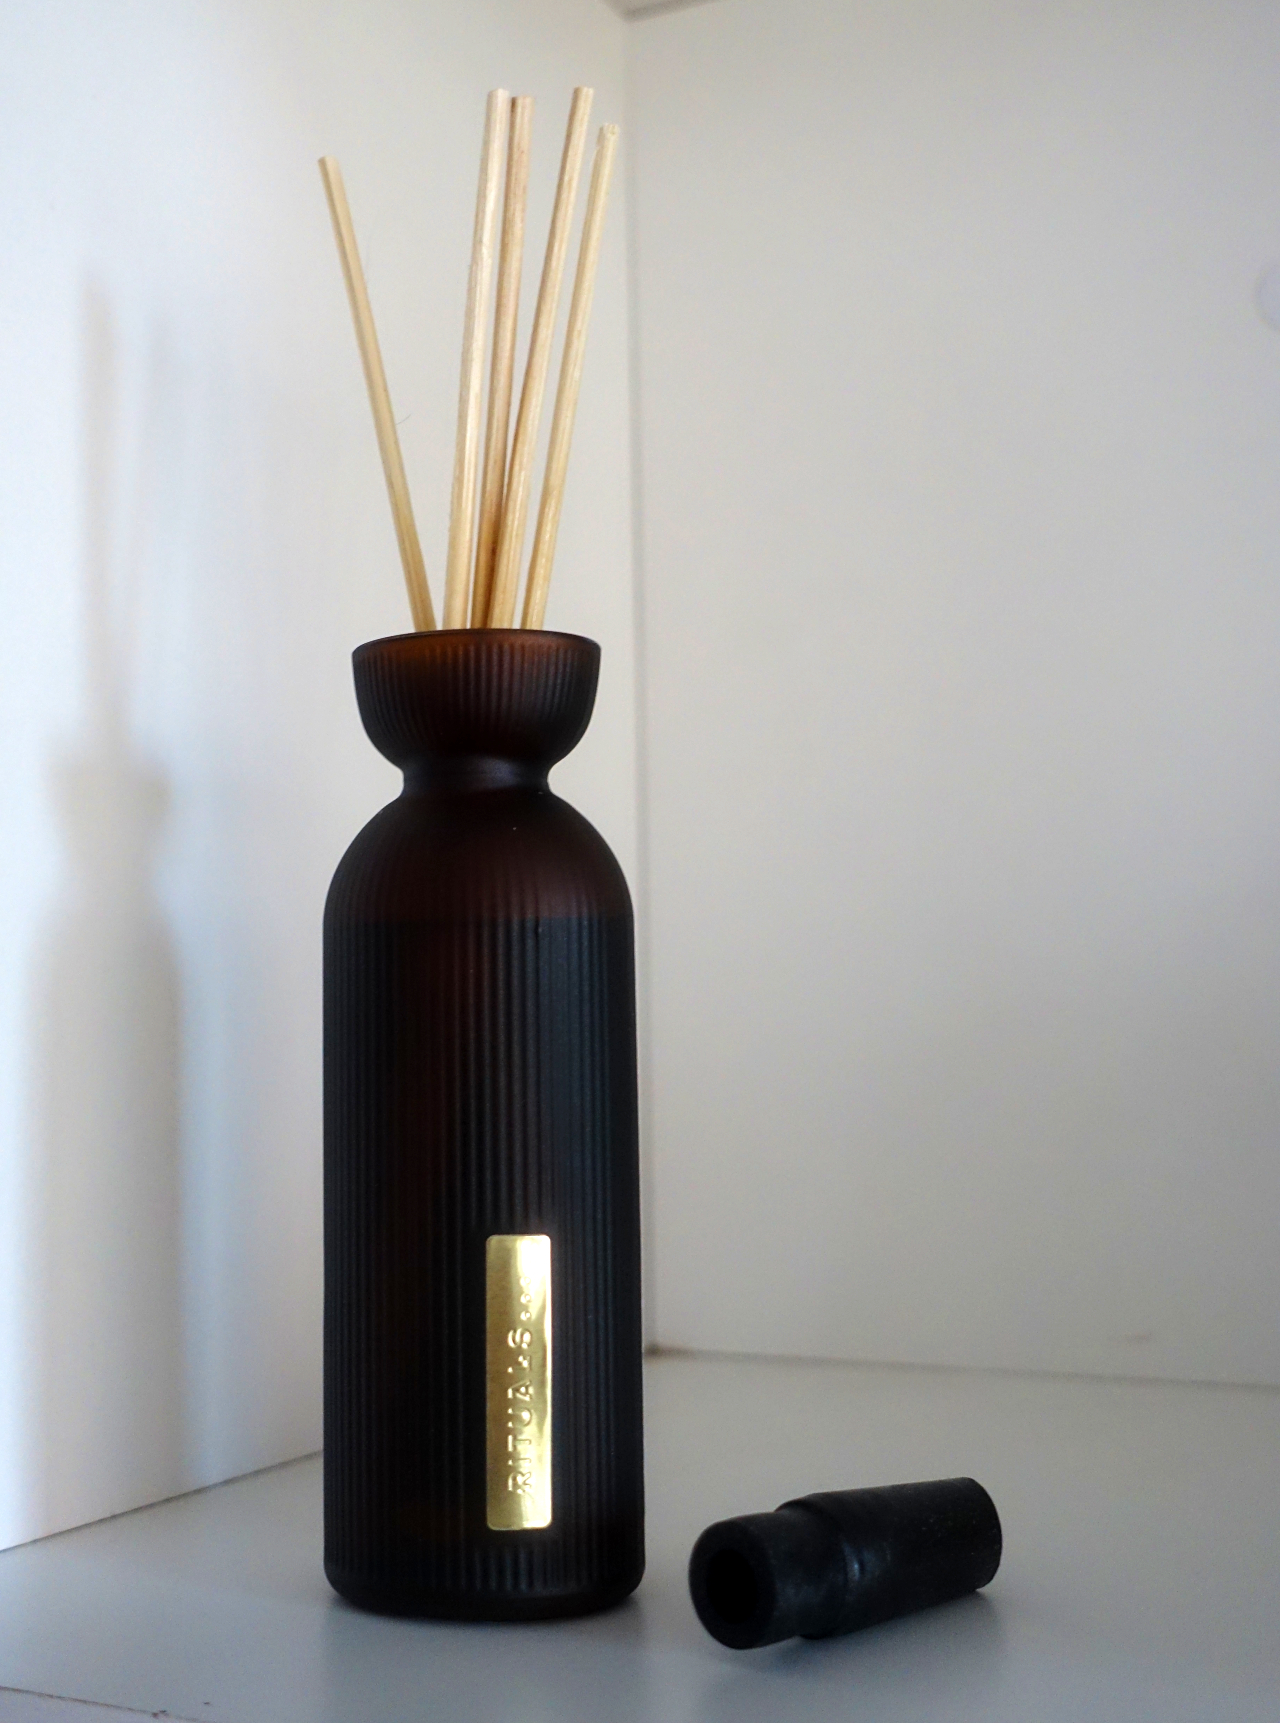 Rituals' Ritual of Advent Calendar Day 2: THE RITUAL OF MEHR Mini Fragrance Sticks